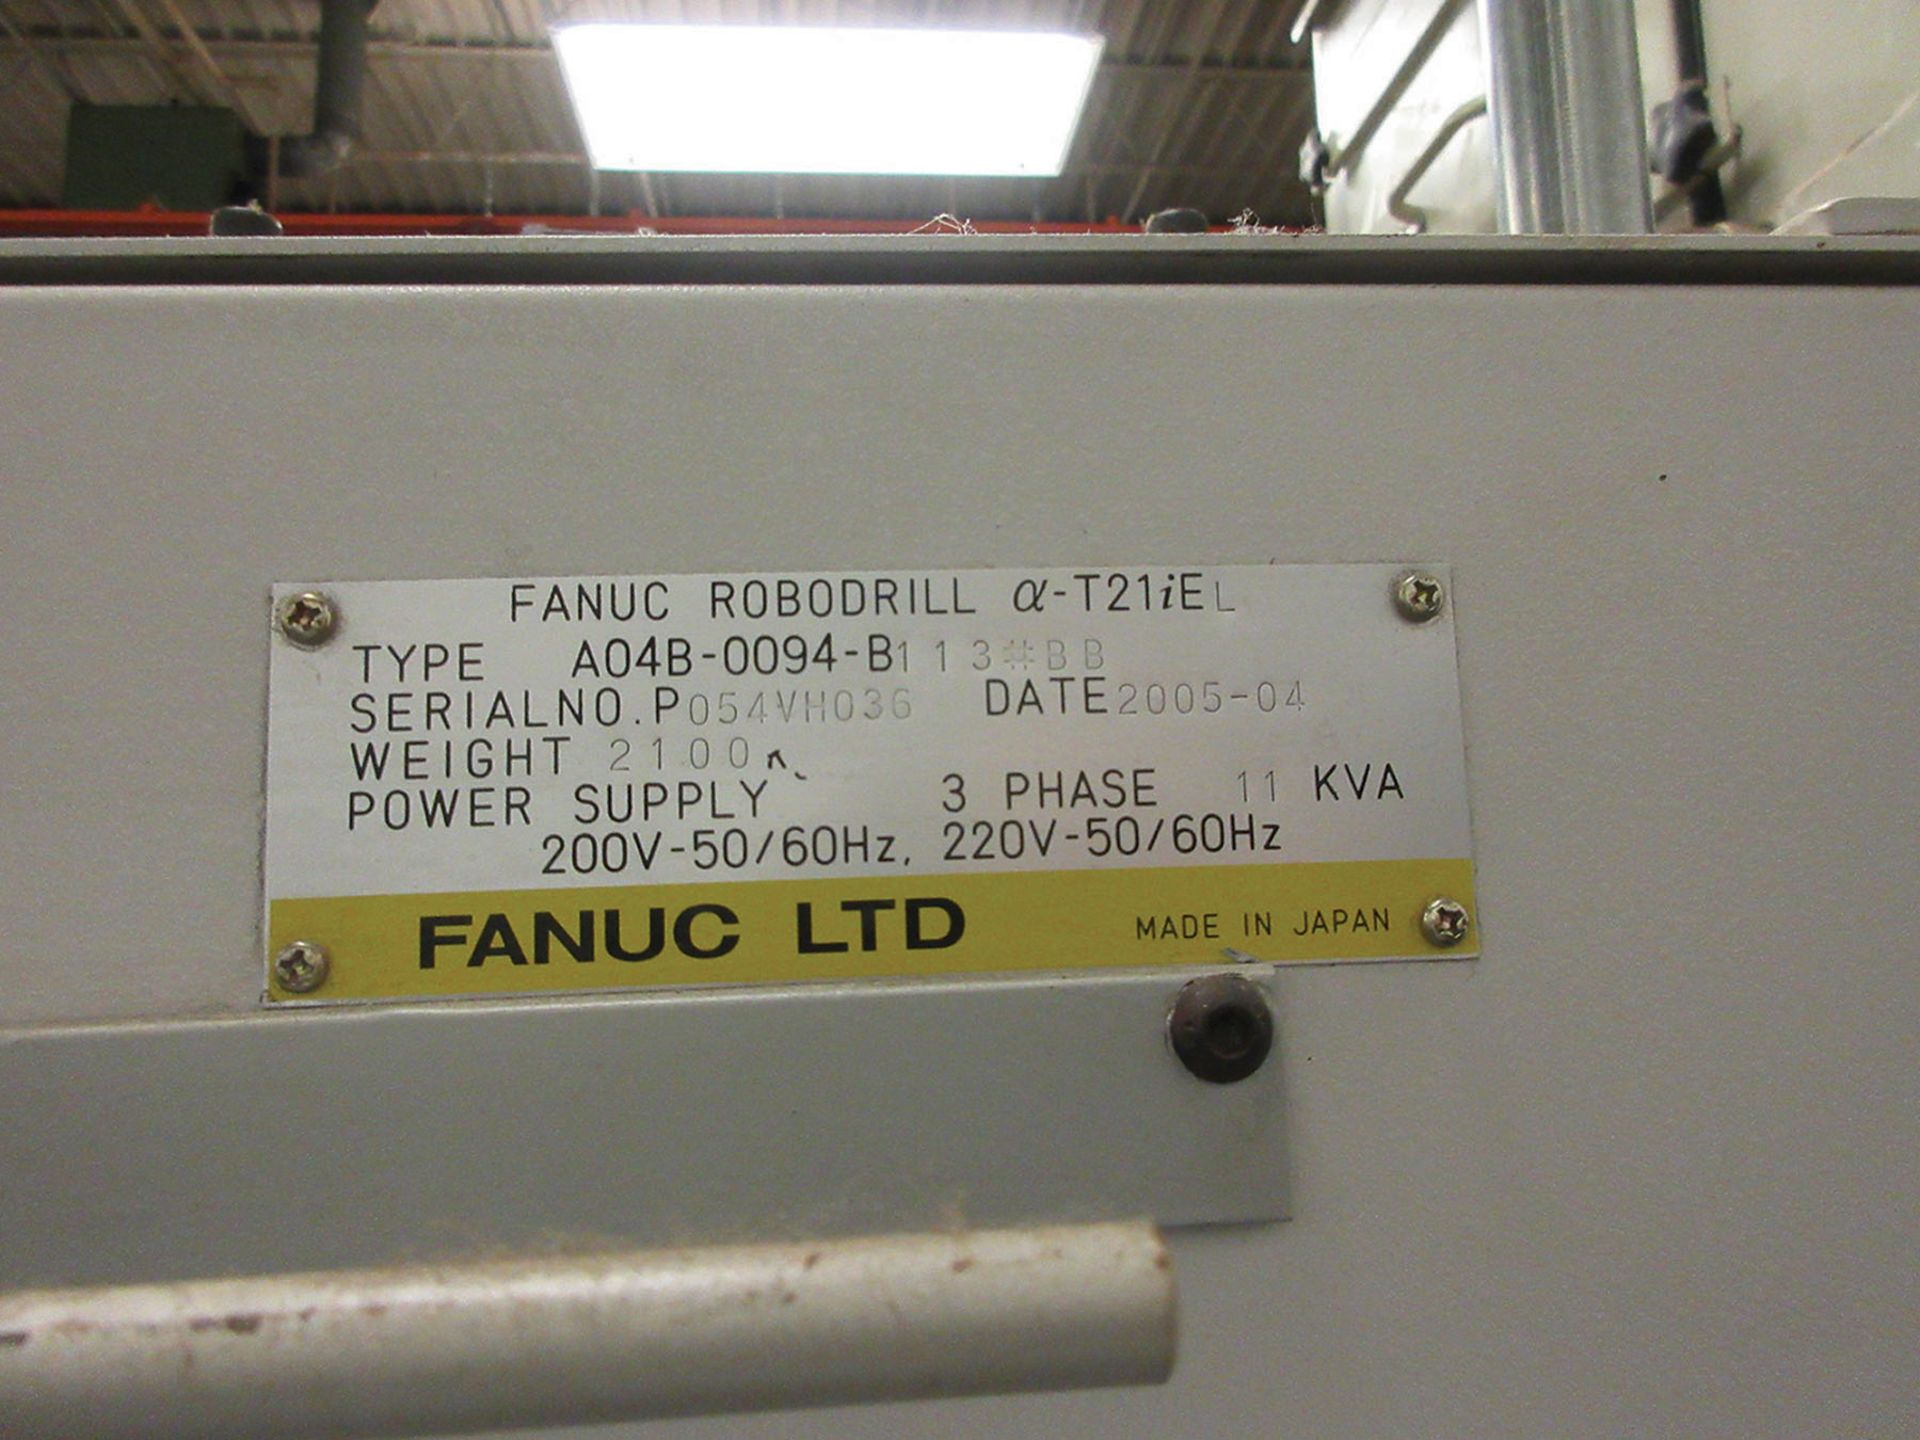 2005 FANUC ROBODRILL 3-AXIS CNC DRILLING CENTER; MODEL A-T21IEL, 18'' X 39'' TABLE, 10,000 RPM - Image 3 of 5